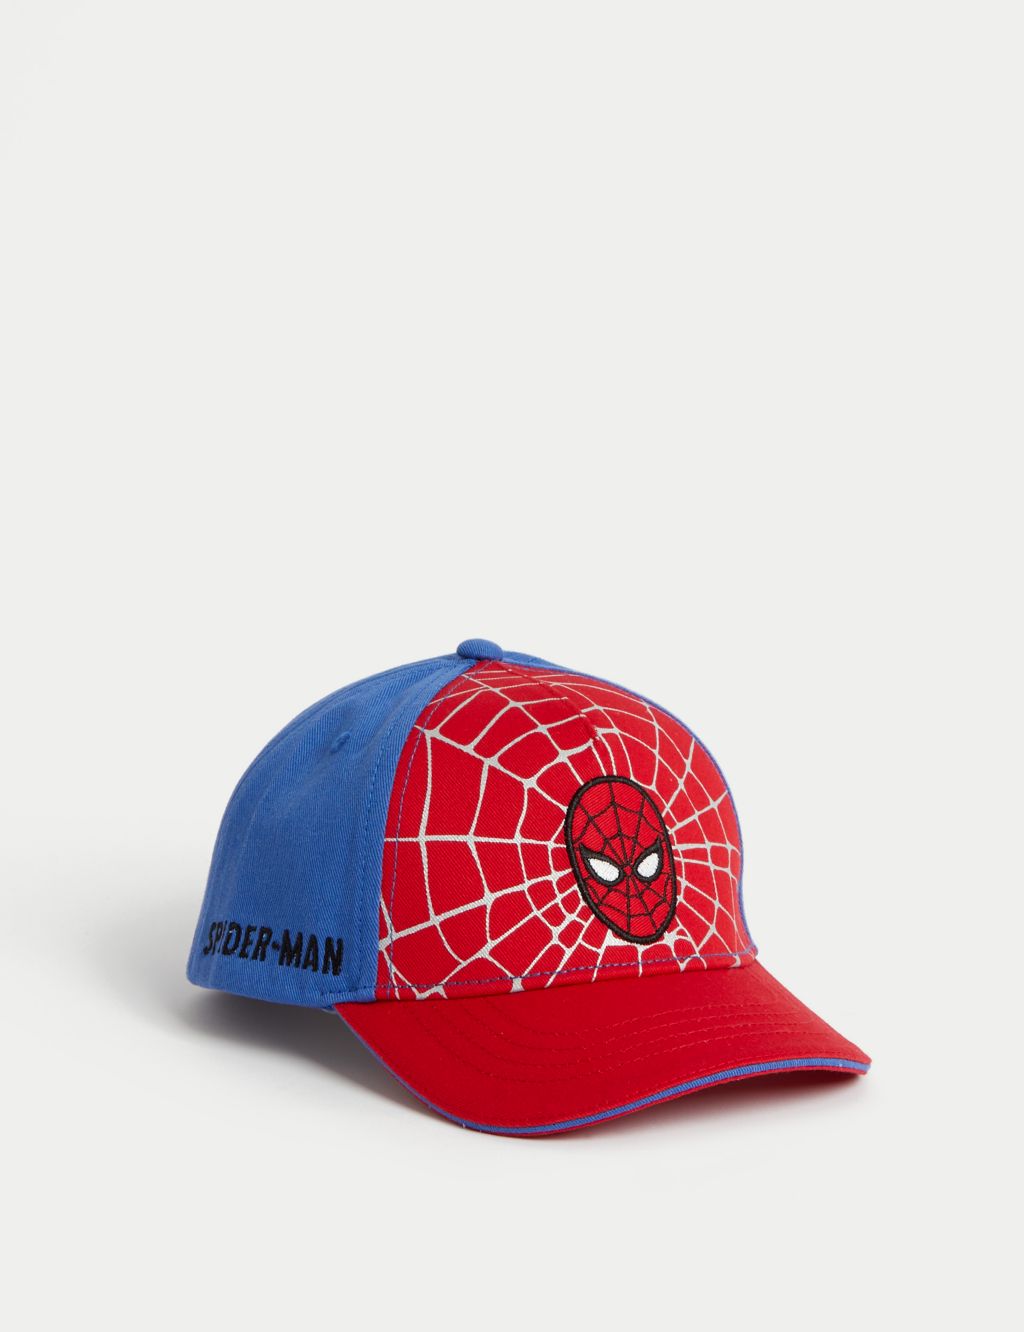 Kids' Pure Cotton Spider-Man™ Baseball Cap (12 Months - 6 Years) image 1